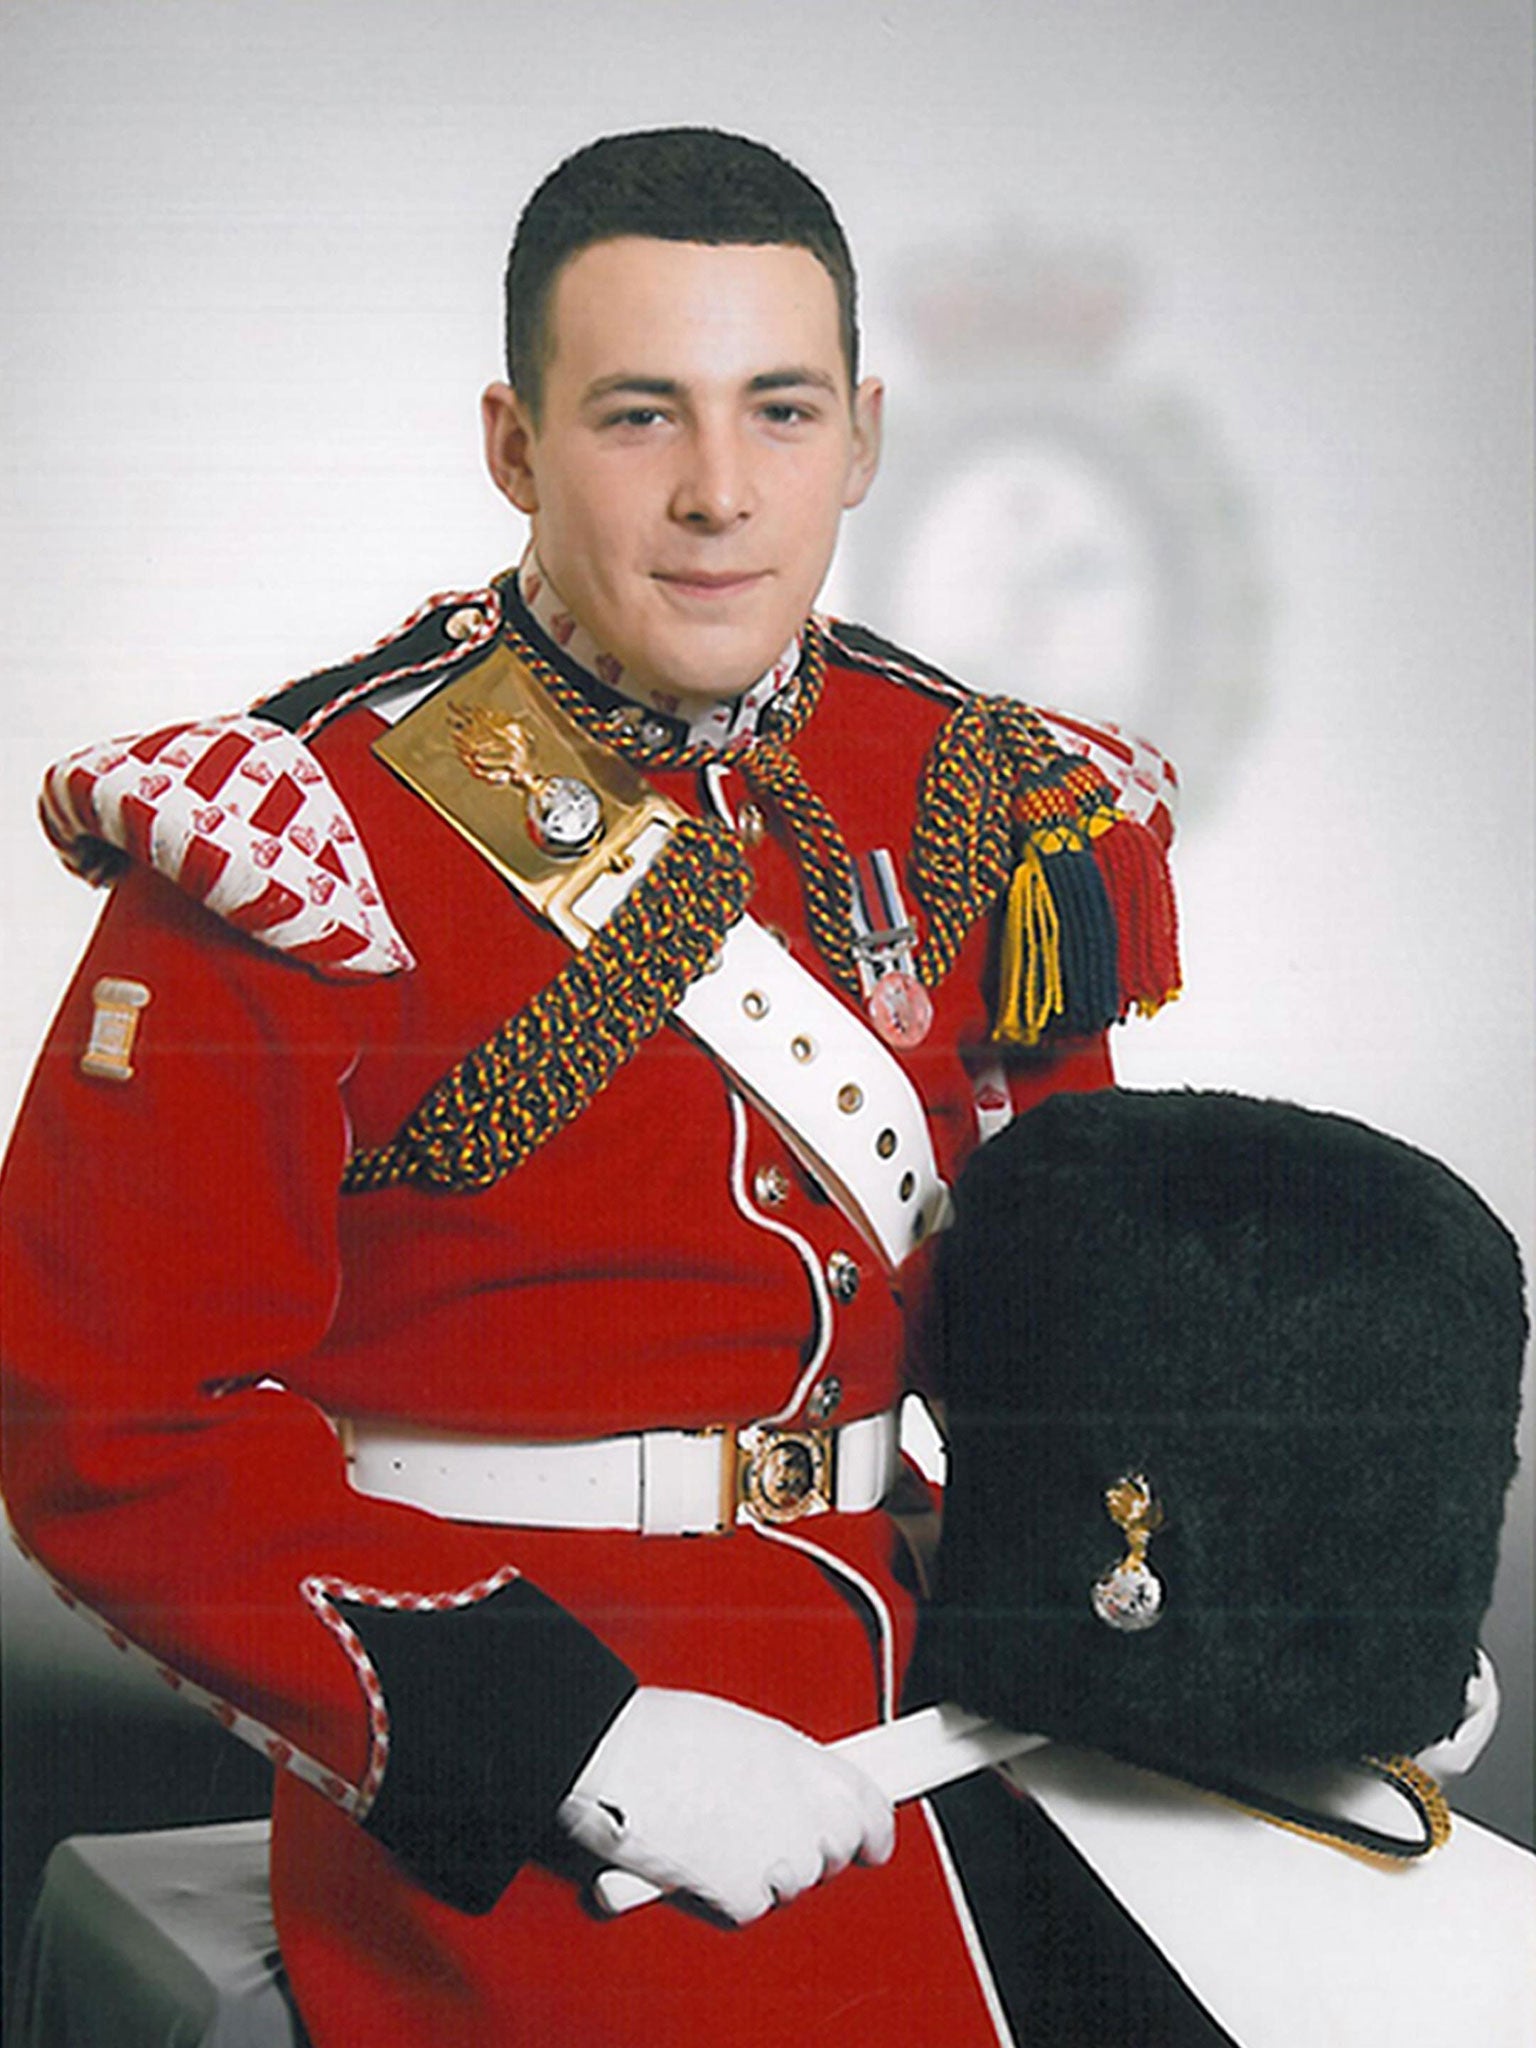 Fusilier Lee Rigby was killed outside Woolwich barracks